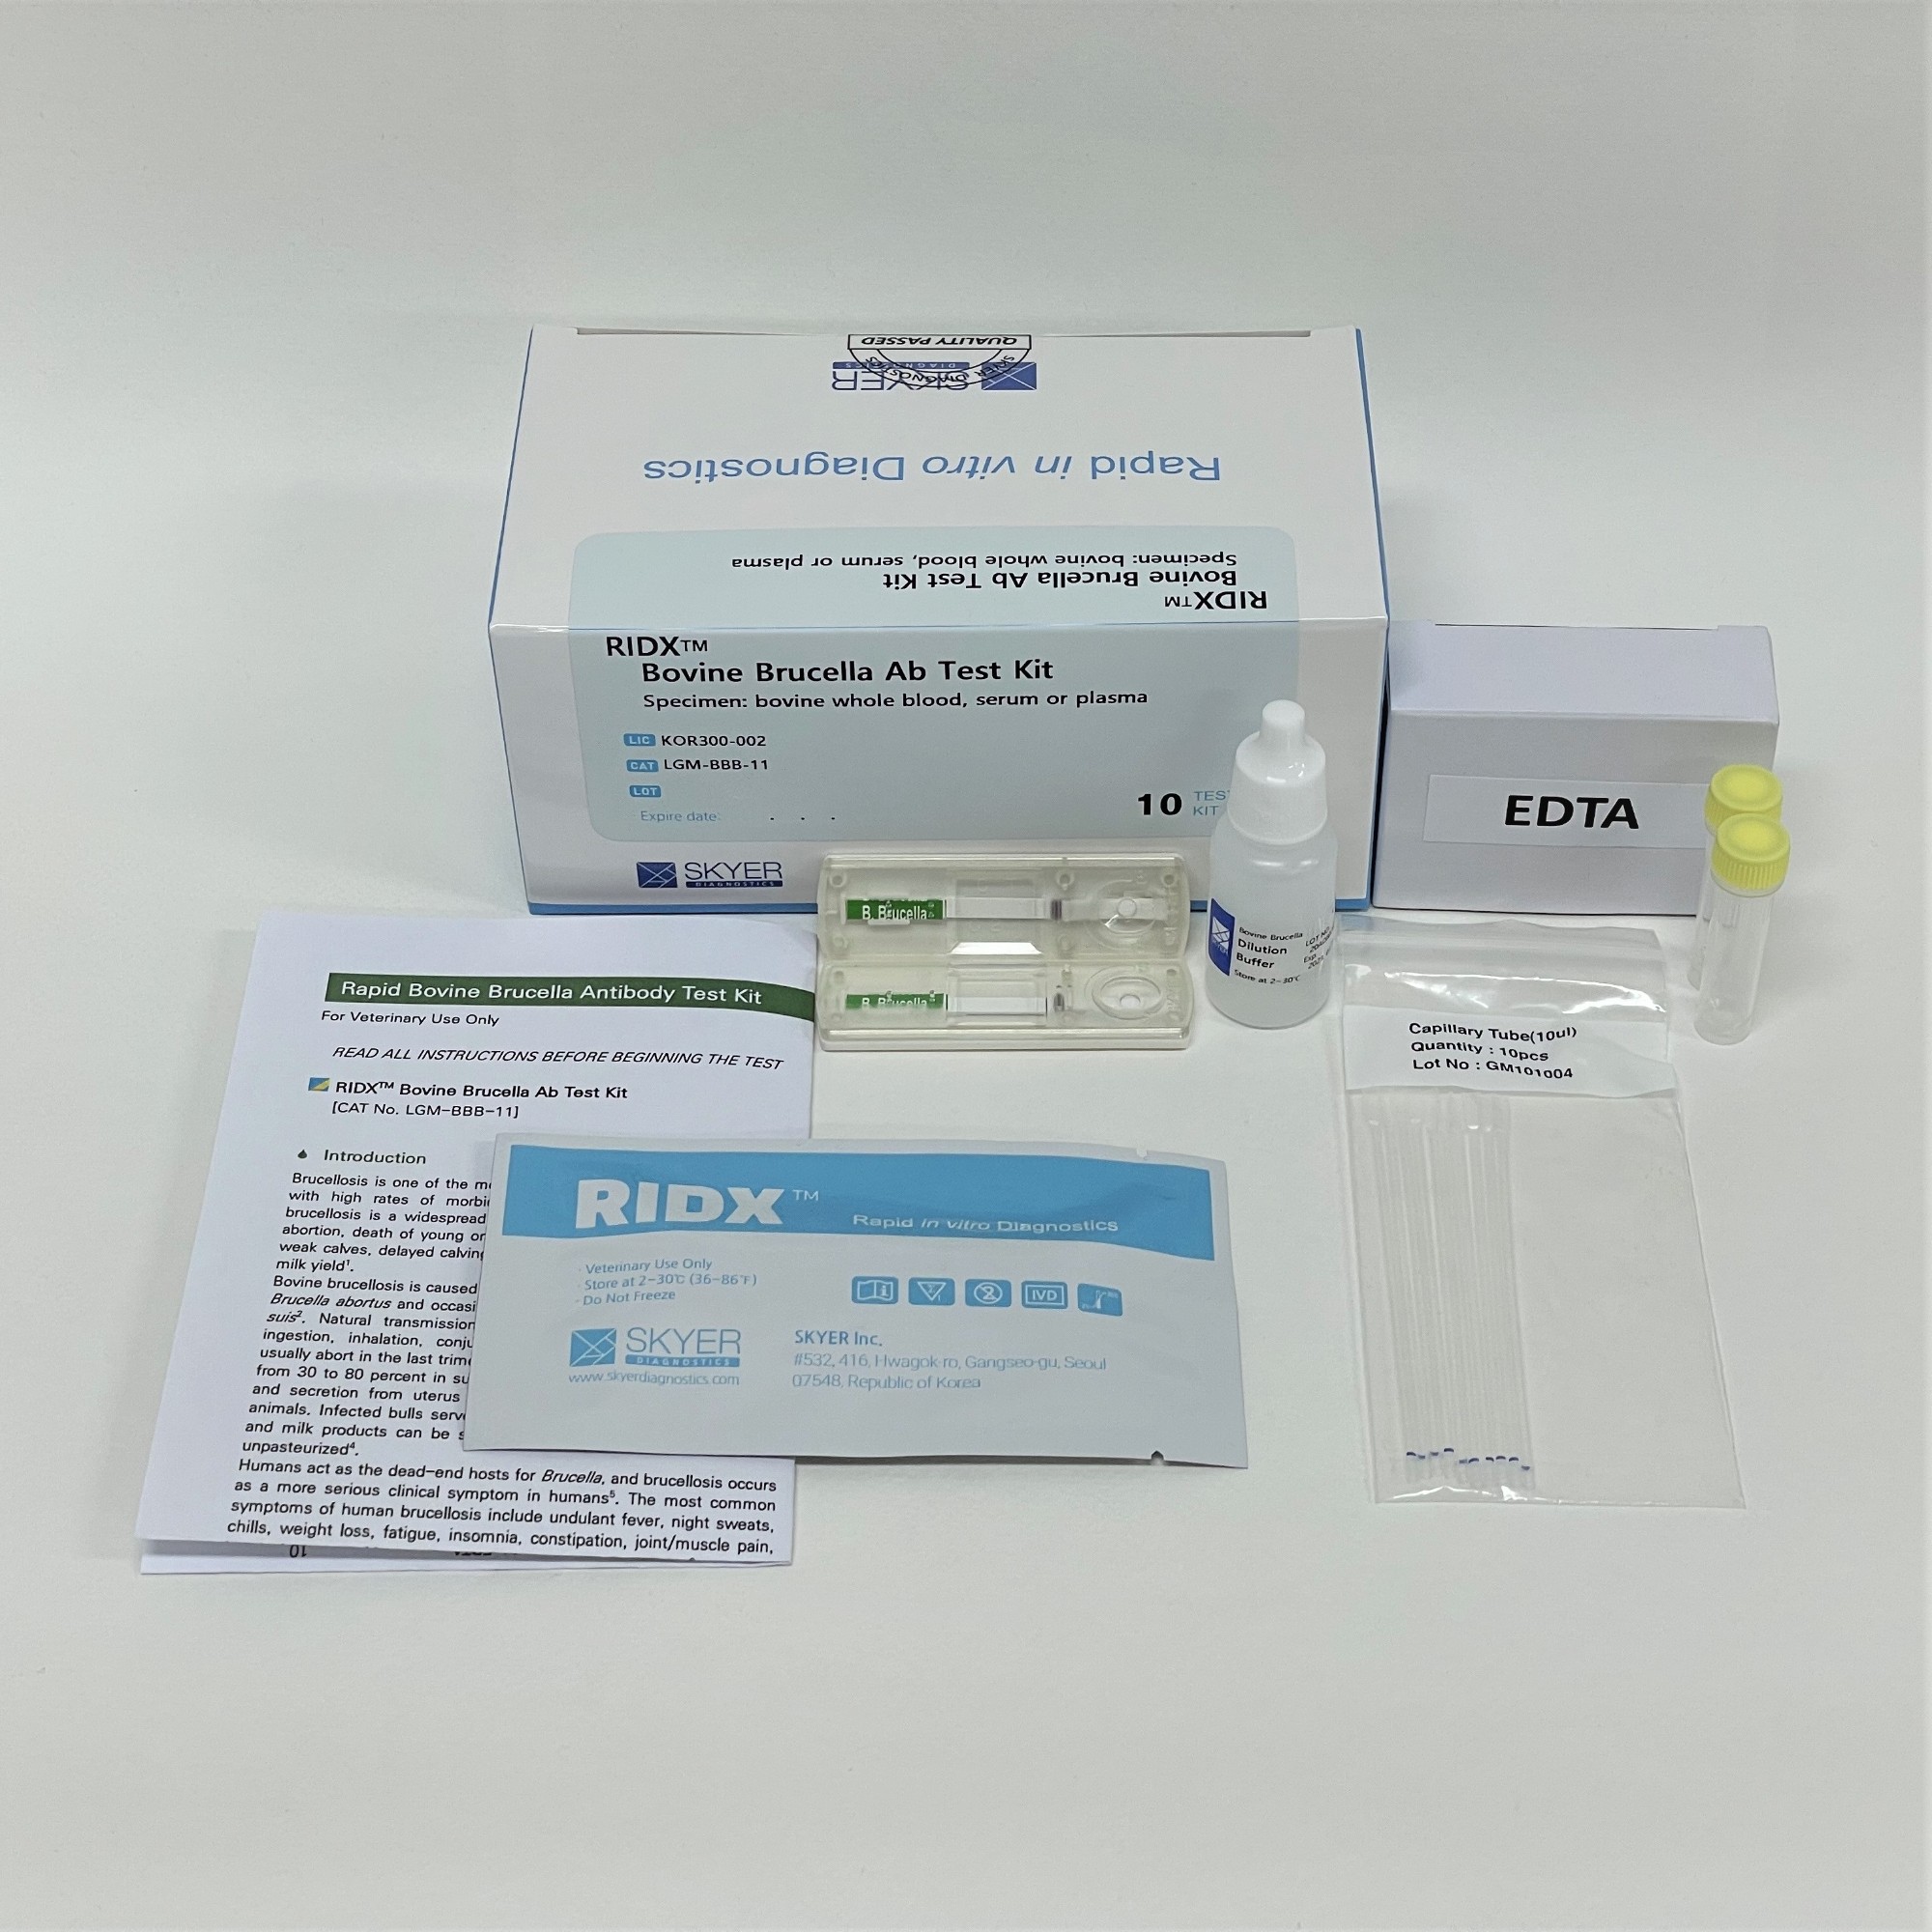 RIDX® Bovine Brucella Ab Test Kit